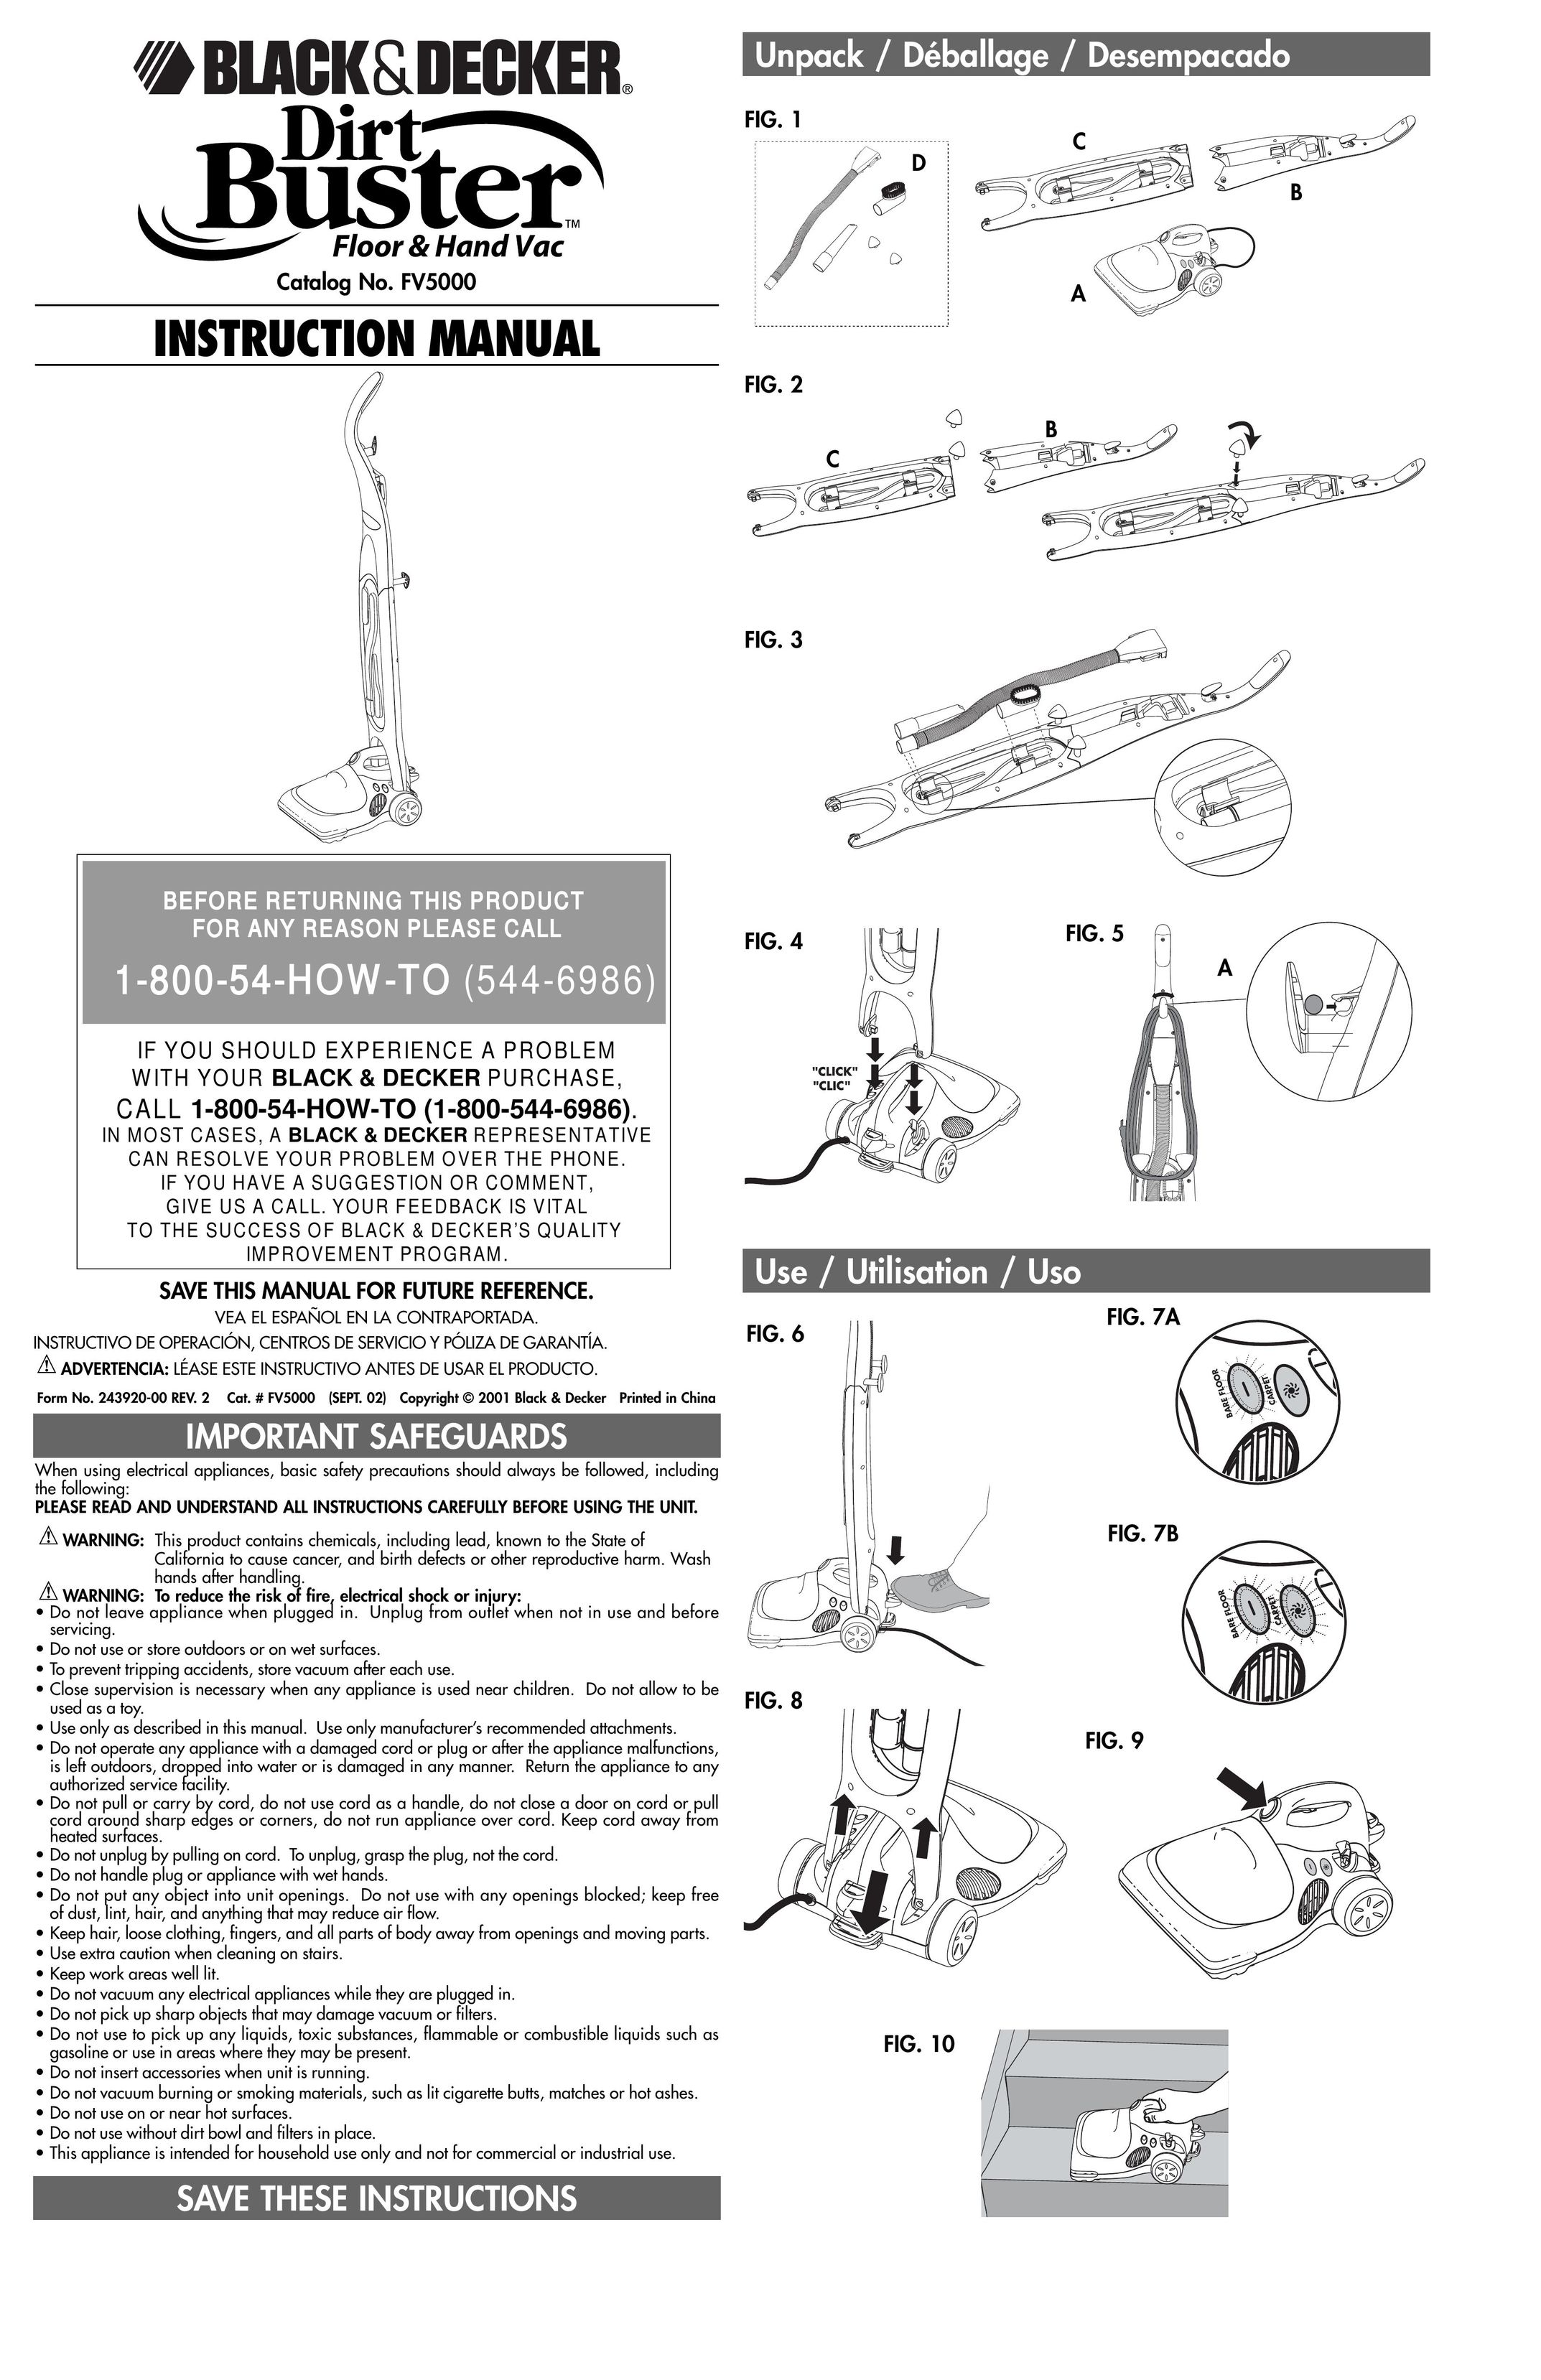 Black & Decker 243920-00 Vacuum Cleaner User Manual